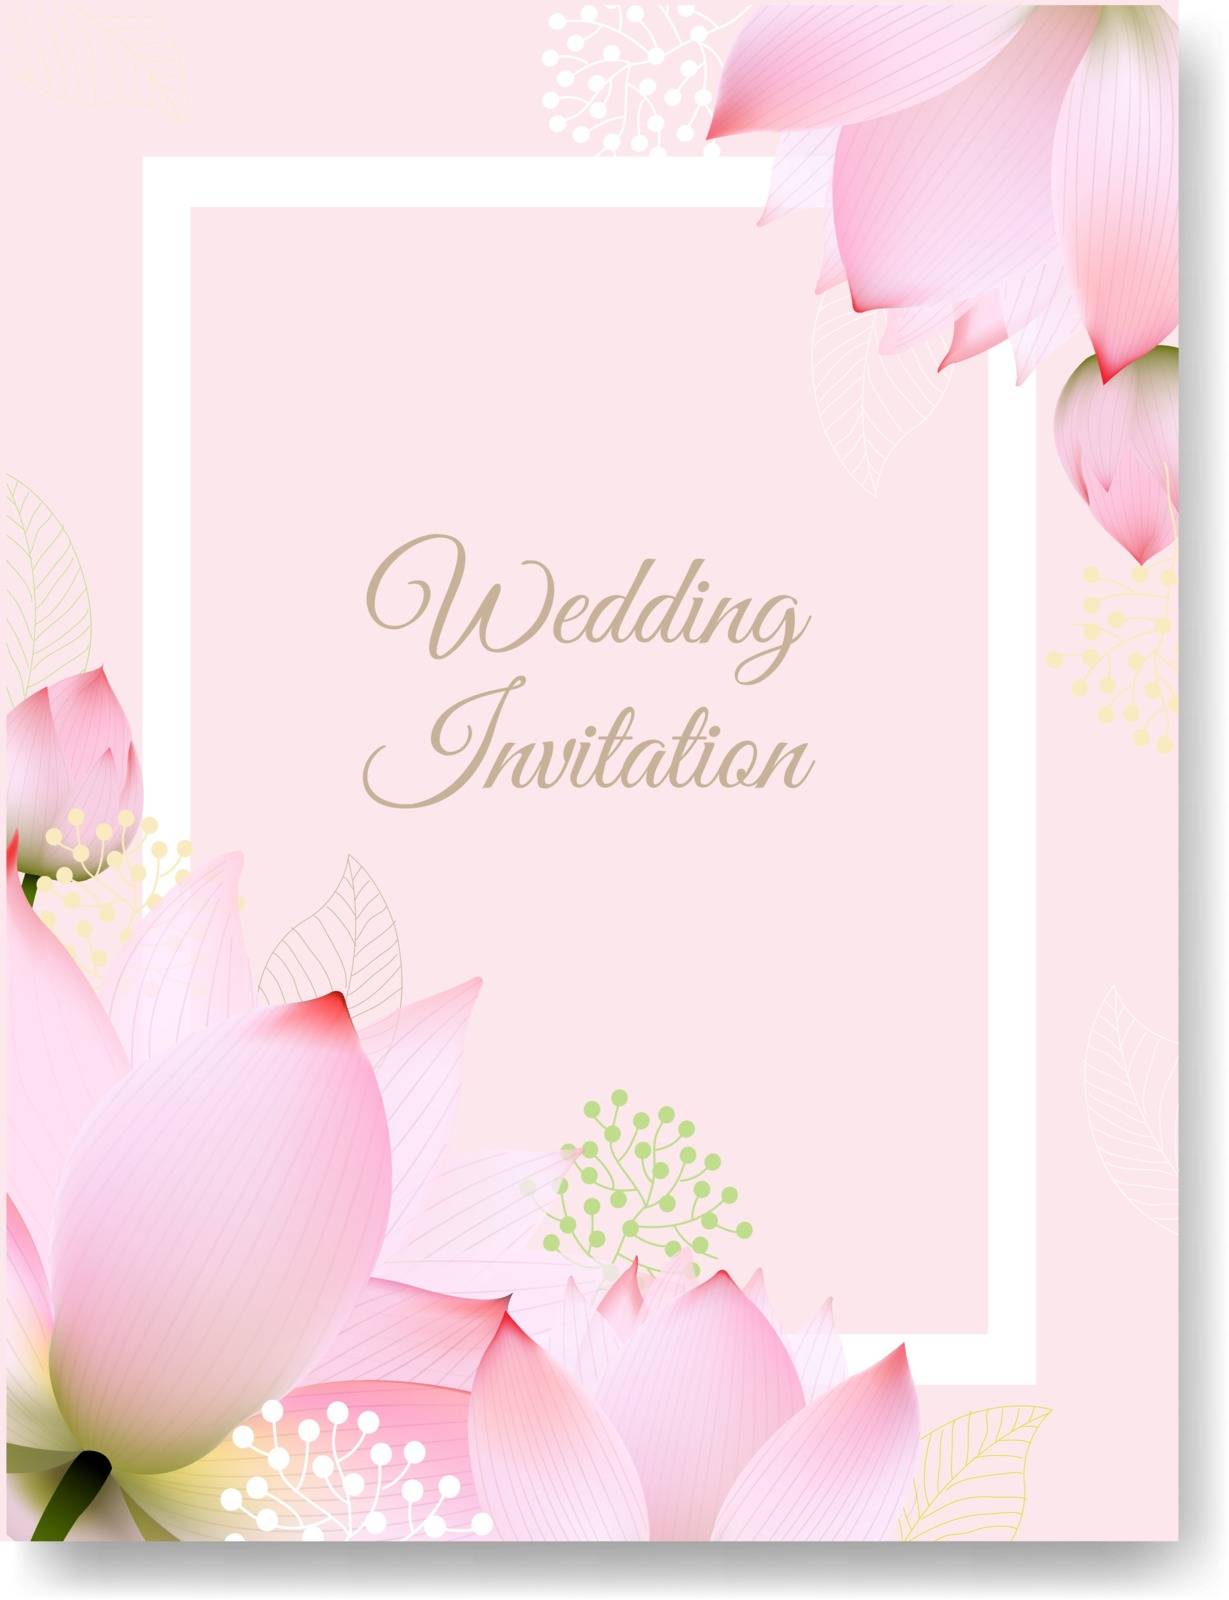 Wedding Invitation With Gradient Mesh, Vector Illustration